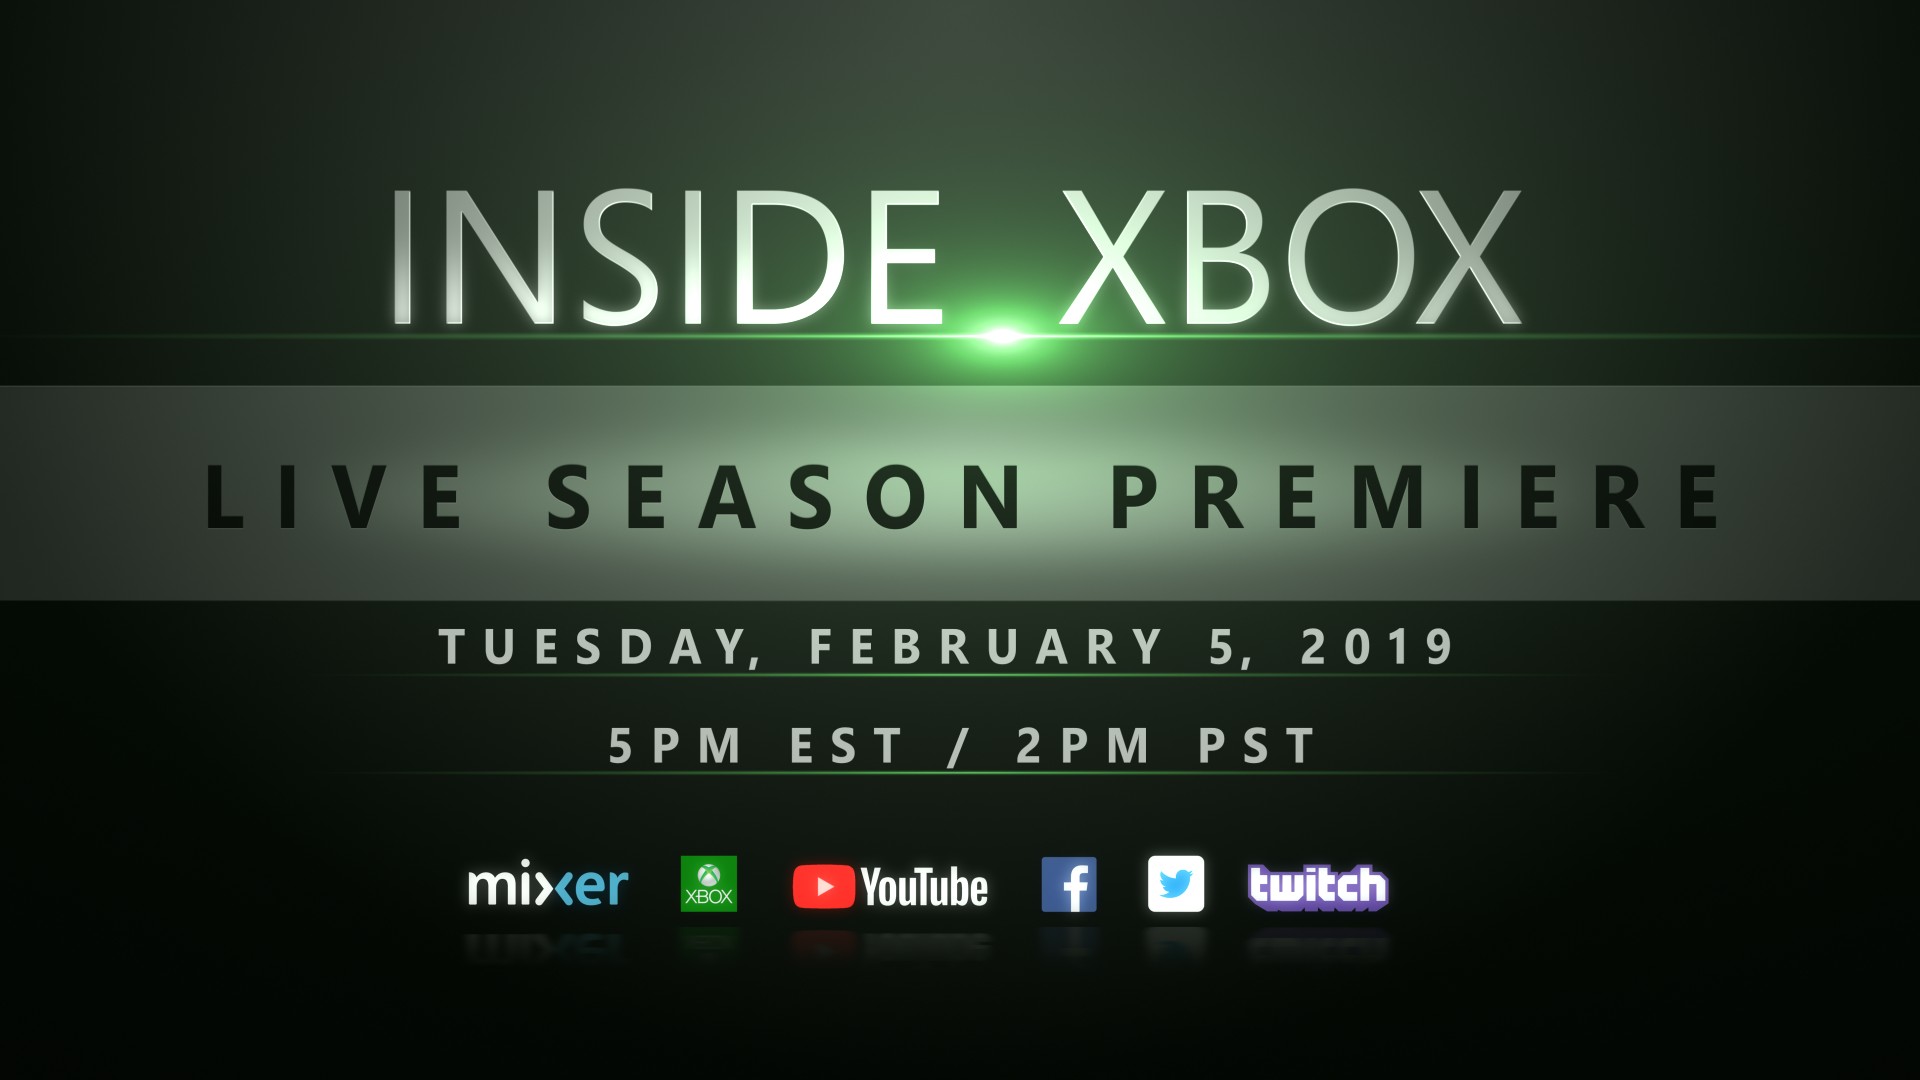 This Week on Xbox: April 19, 2019 2019_Feb05_Inside_Xbox_Promo1_Thumbnail_16x9_V2.jpg